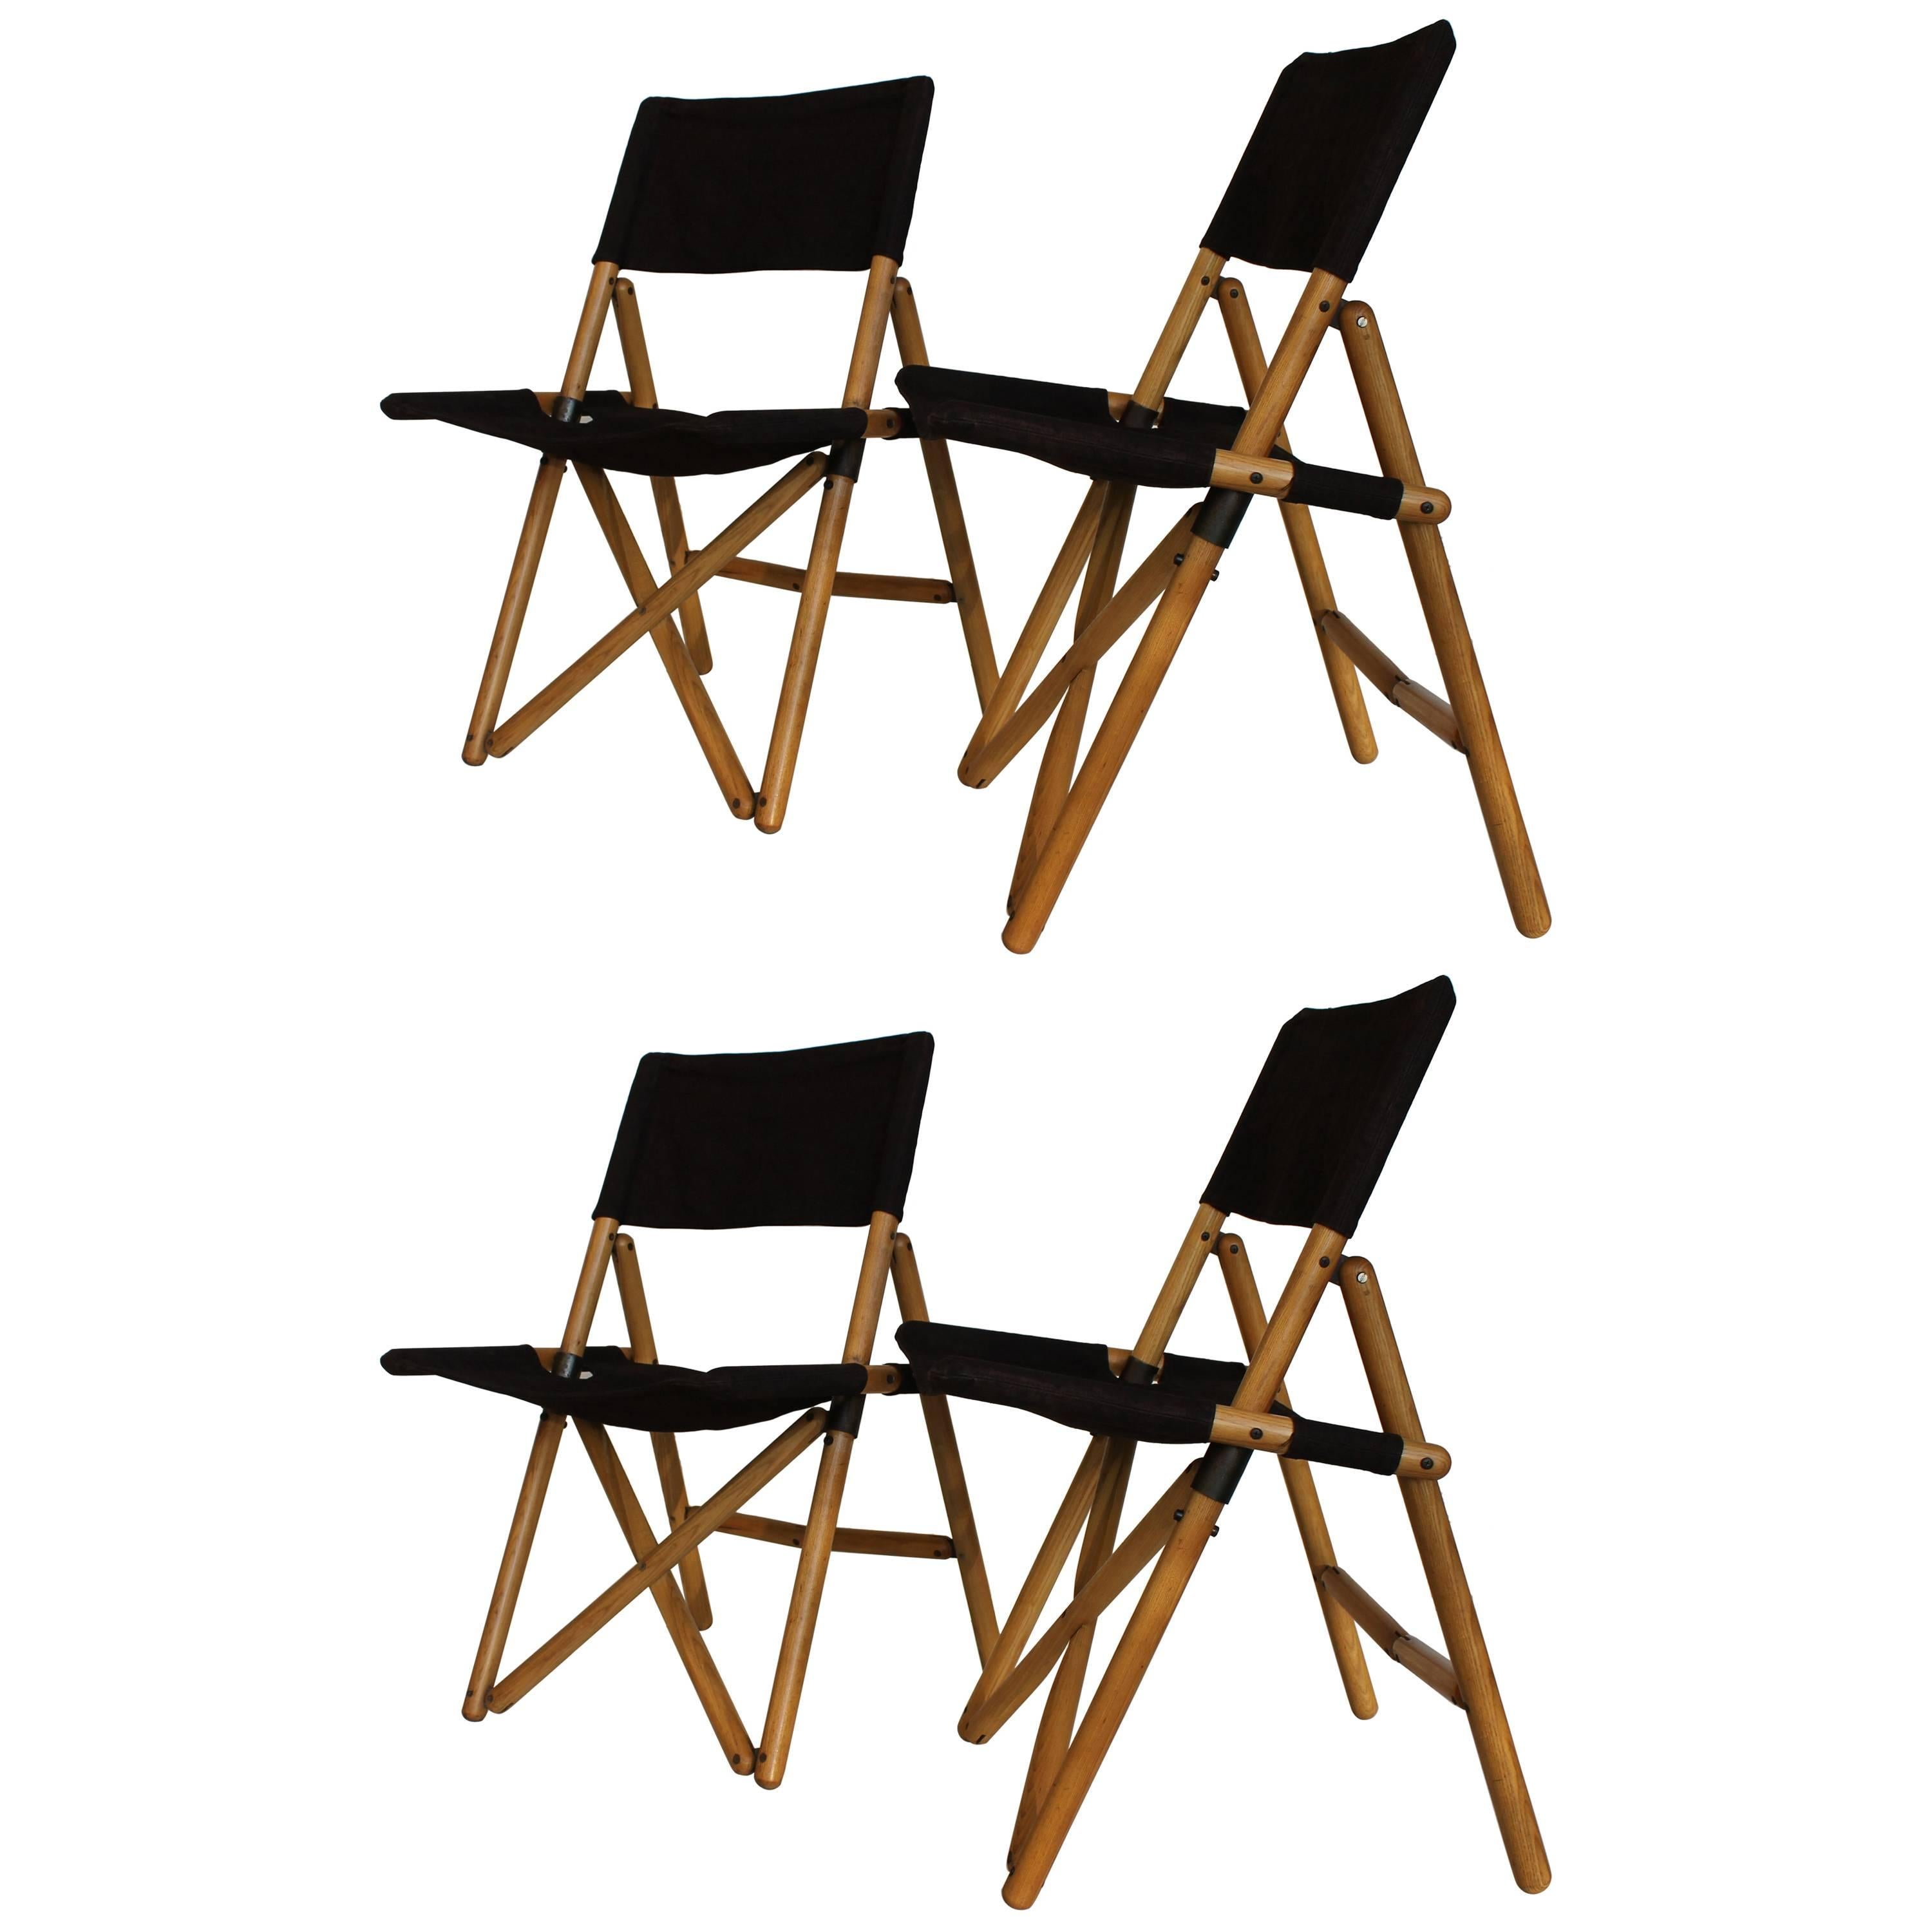 Four Zanotta "Navy" Folding Chairs by Sergio Asti 1969.